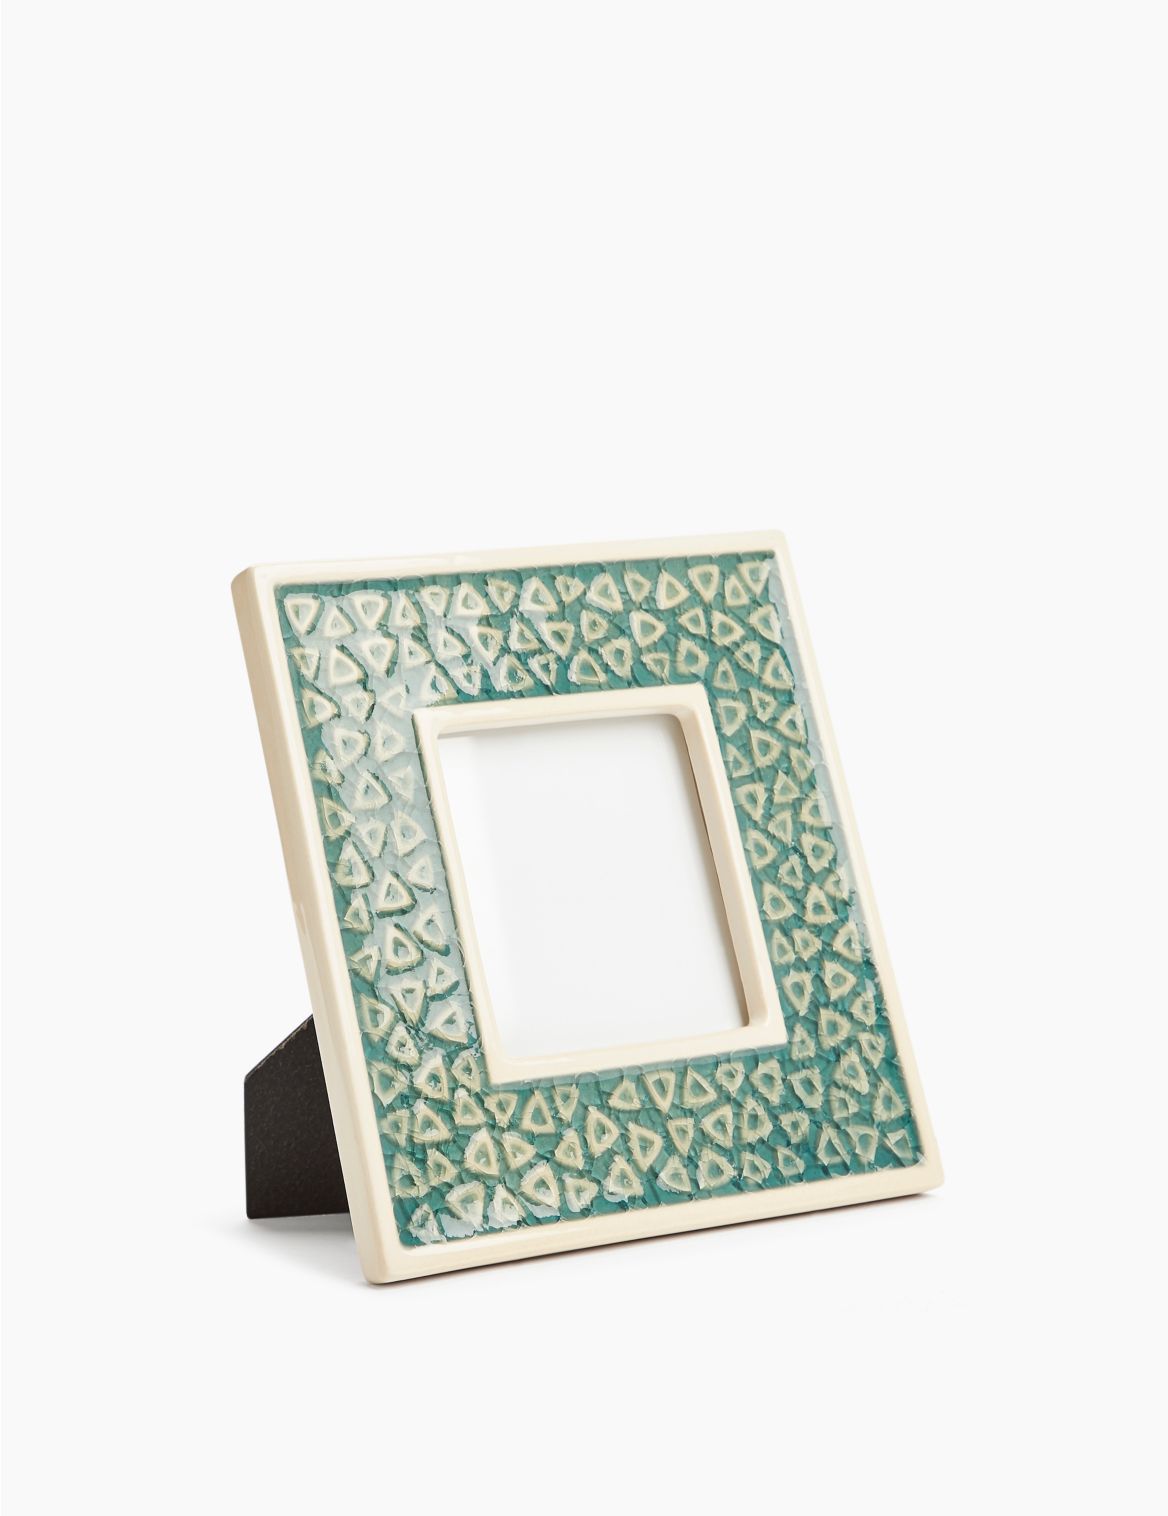 Ceramic Geometric Photo Frame 3x3 inch green